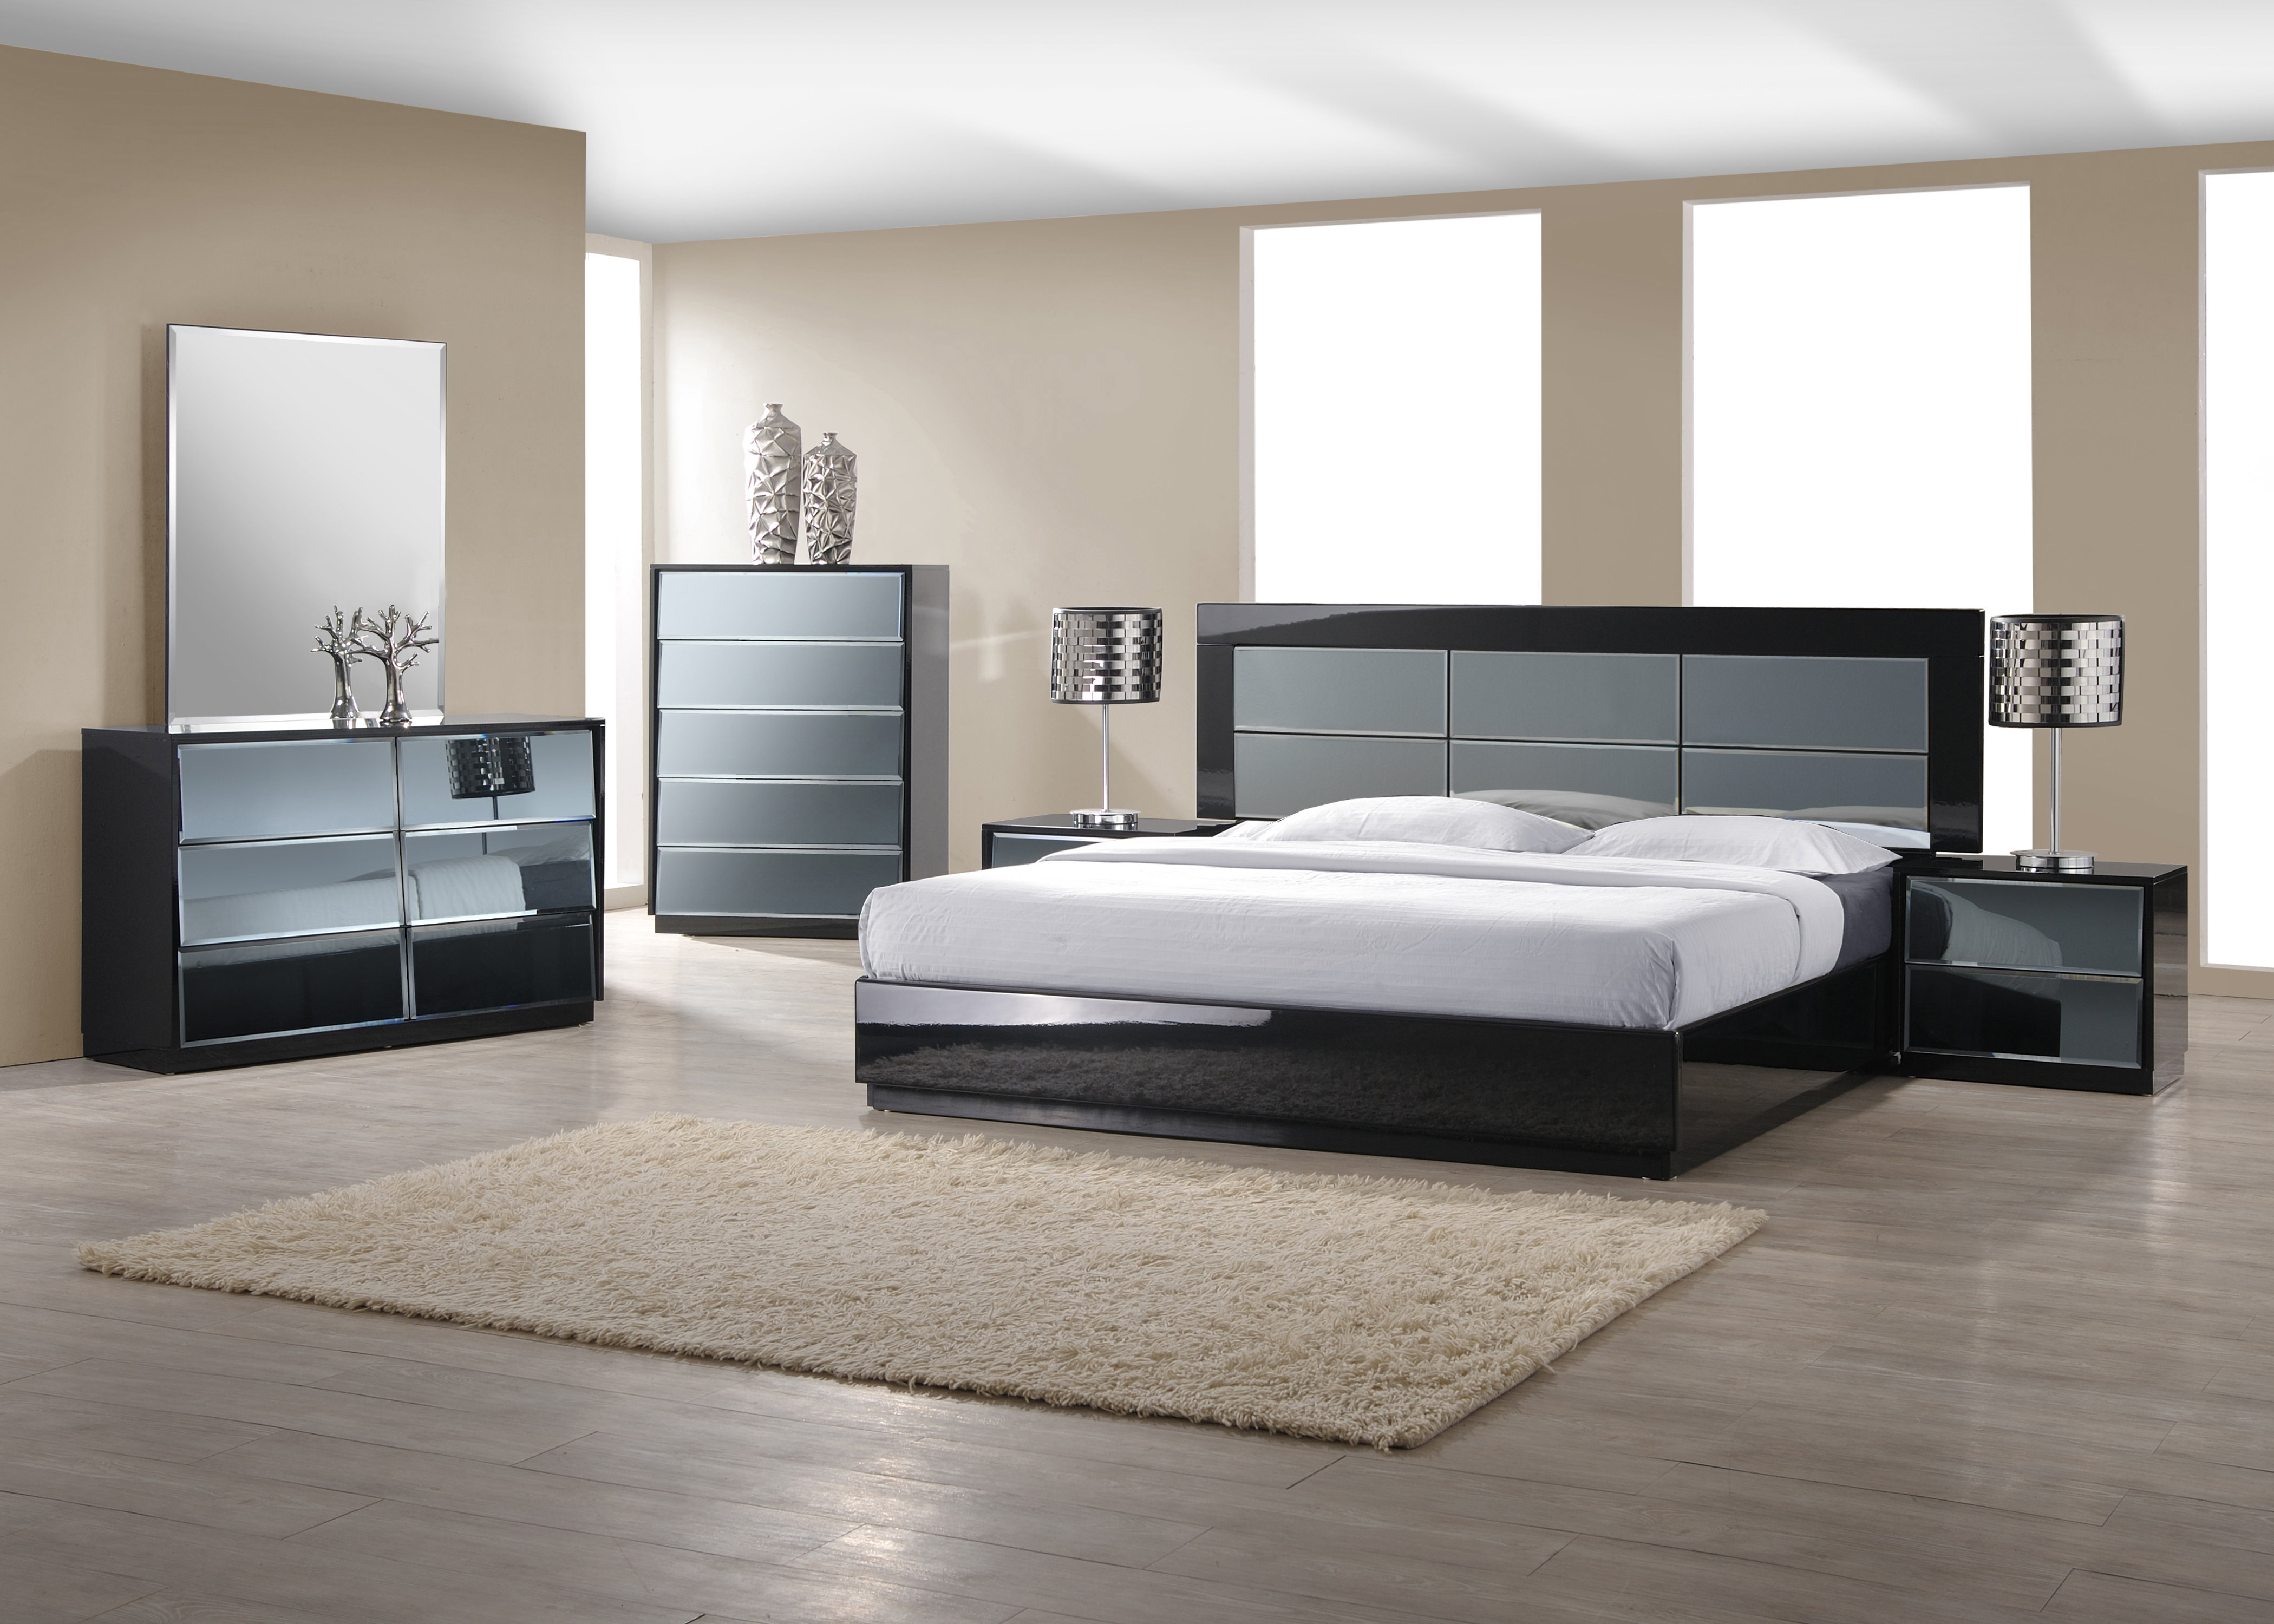 Ashish Contemporary Platform Configurable Bedroom Set intended for measurements 4200 X 3000